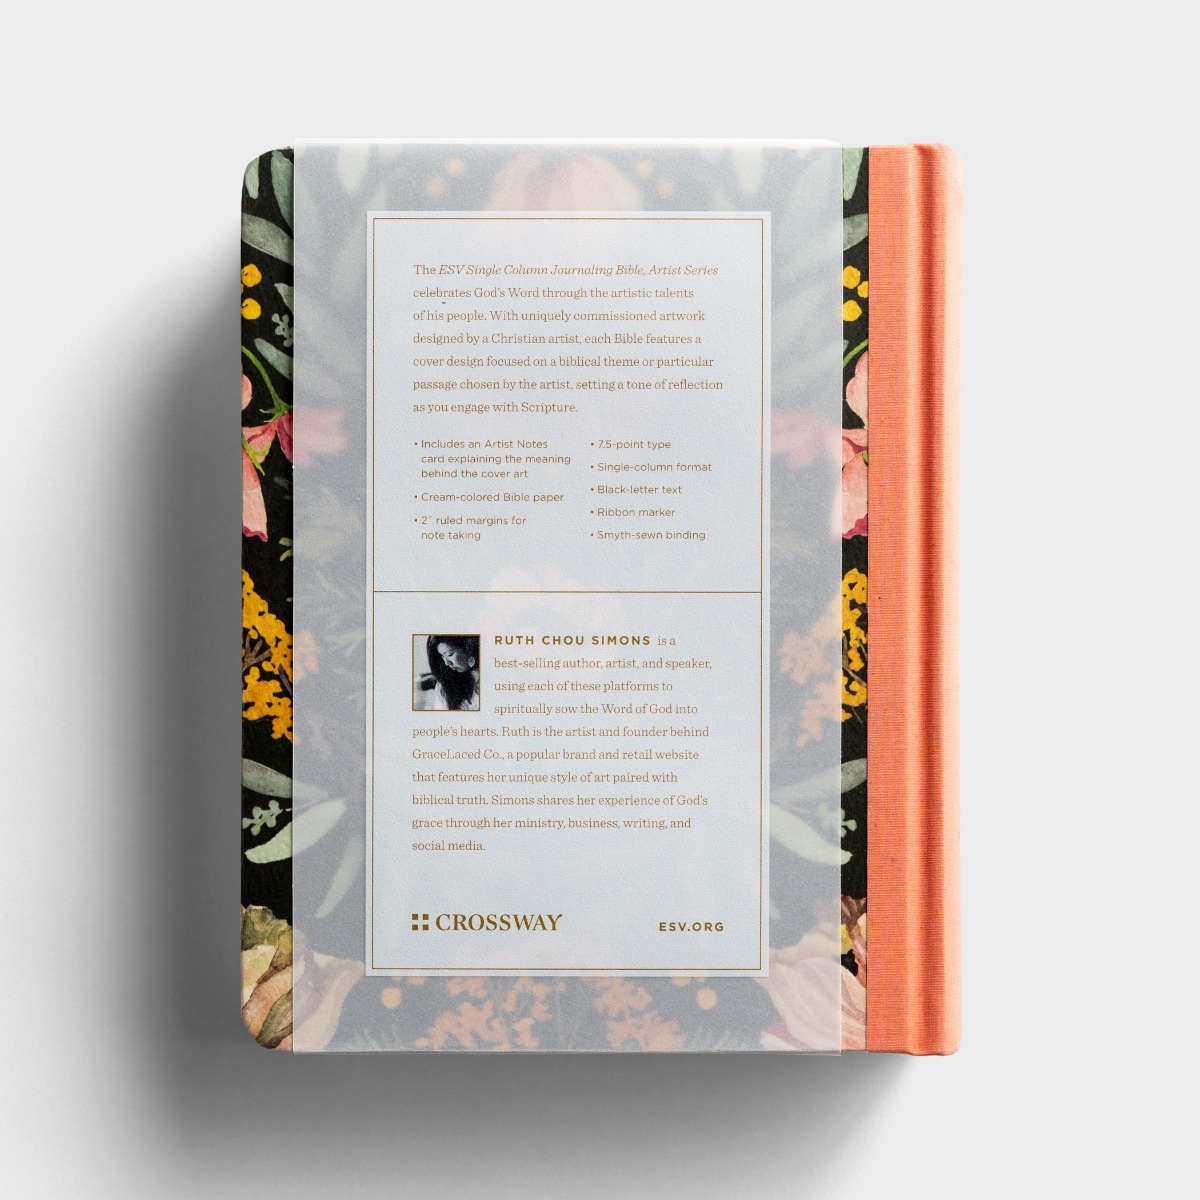 ESV Single Column Journaling Bible - Artist Series - Ruth Chou Simons - Hardcover